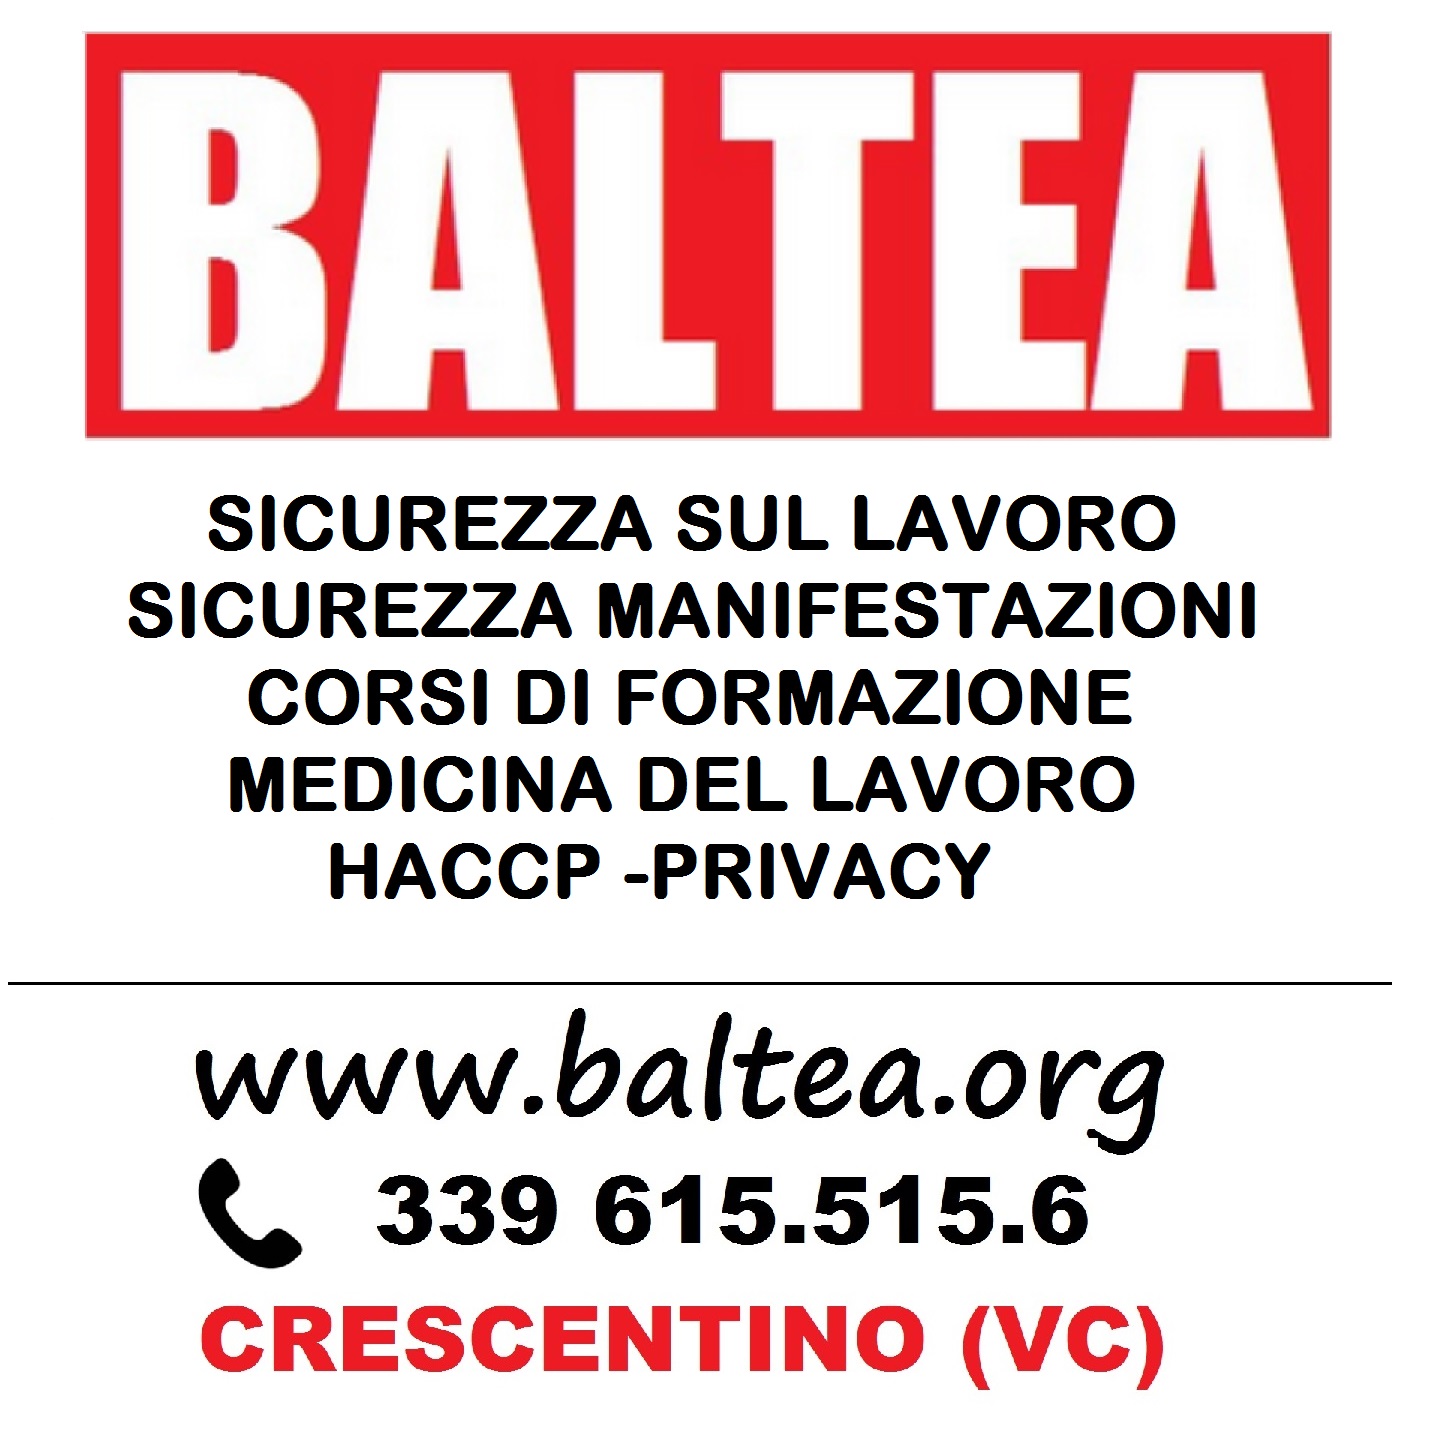 Baltea